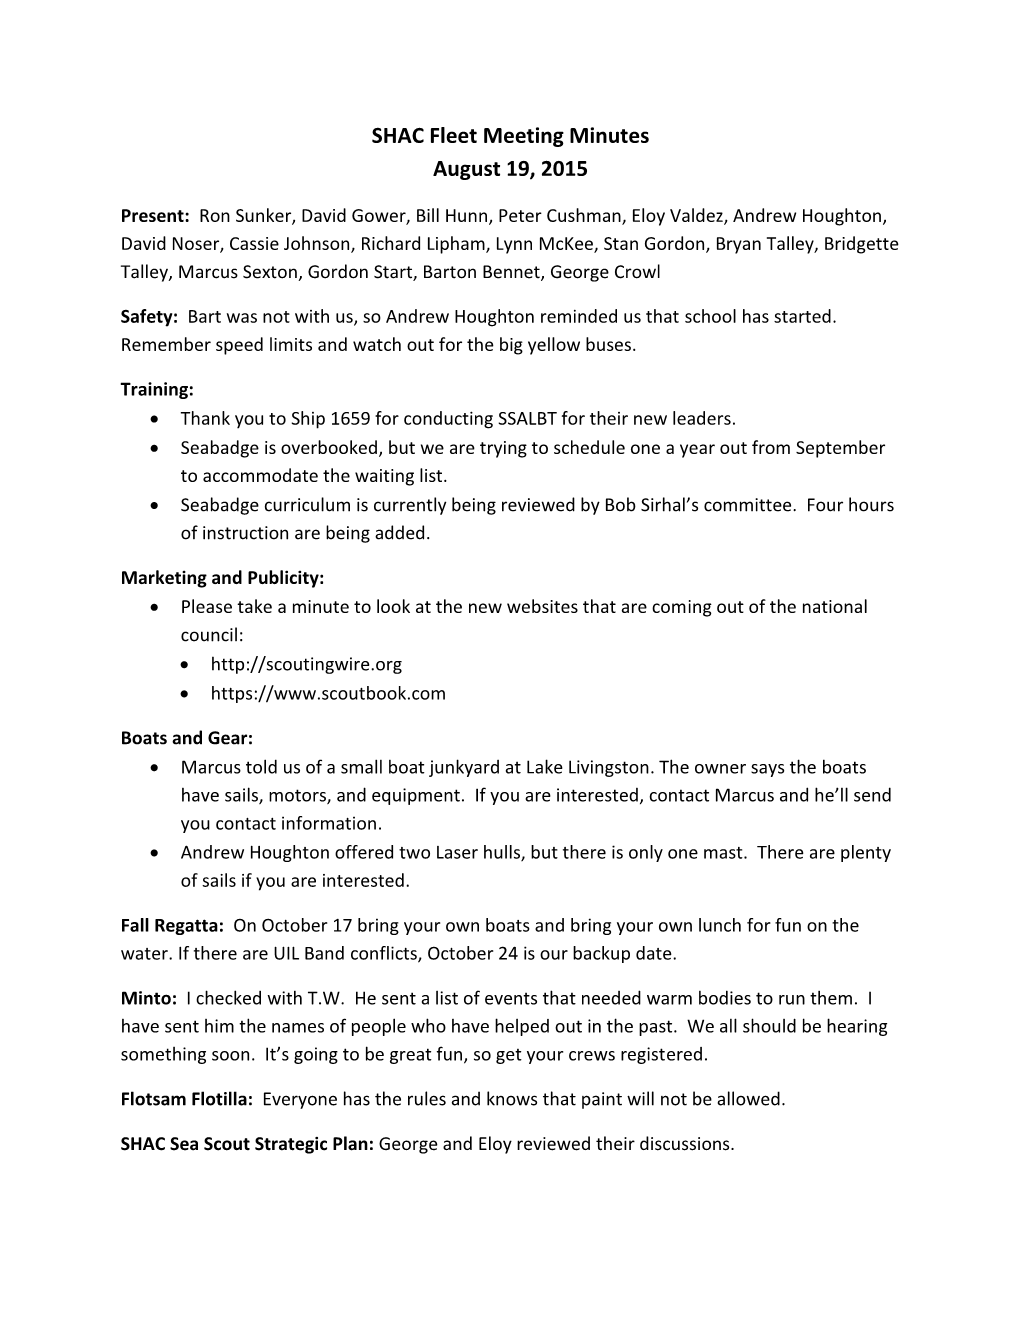 SHAC Fleet Meeting Minutes August 19, 2015